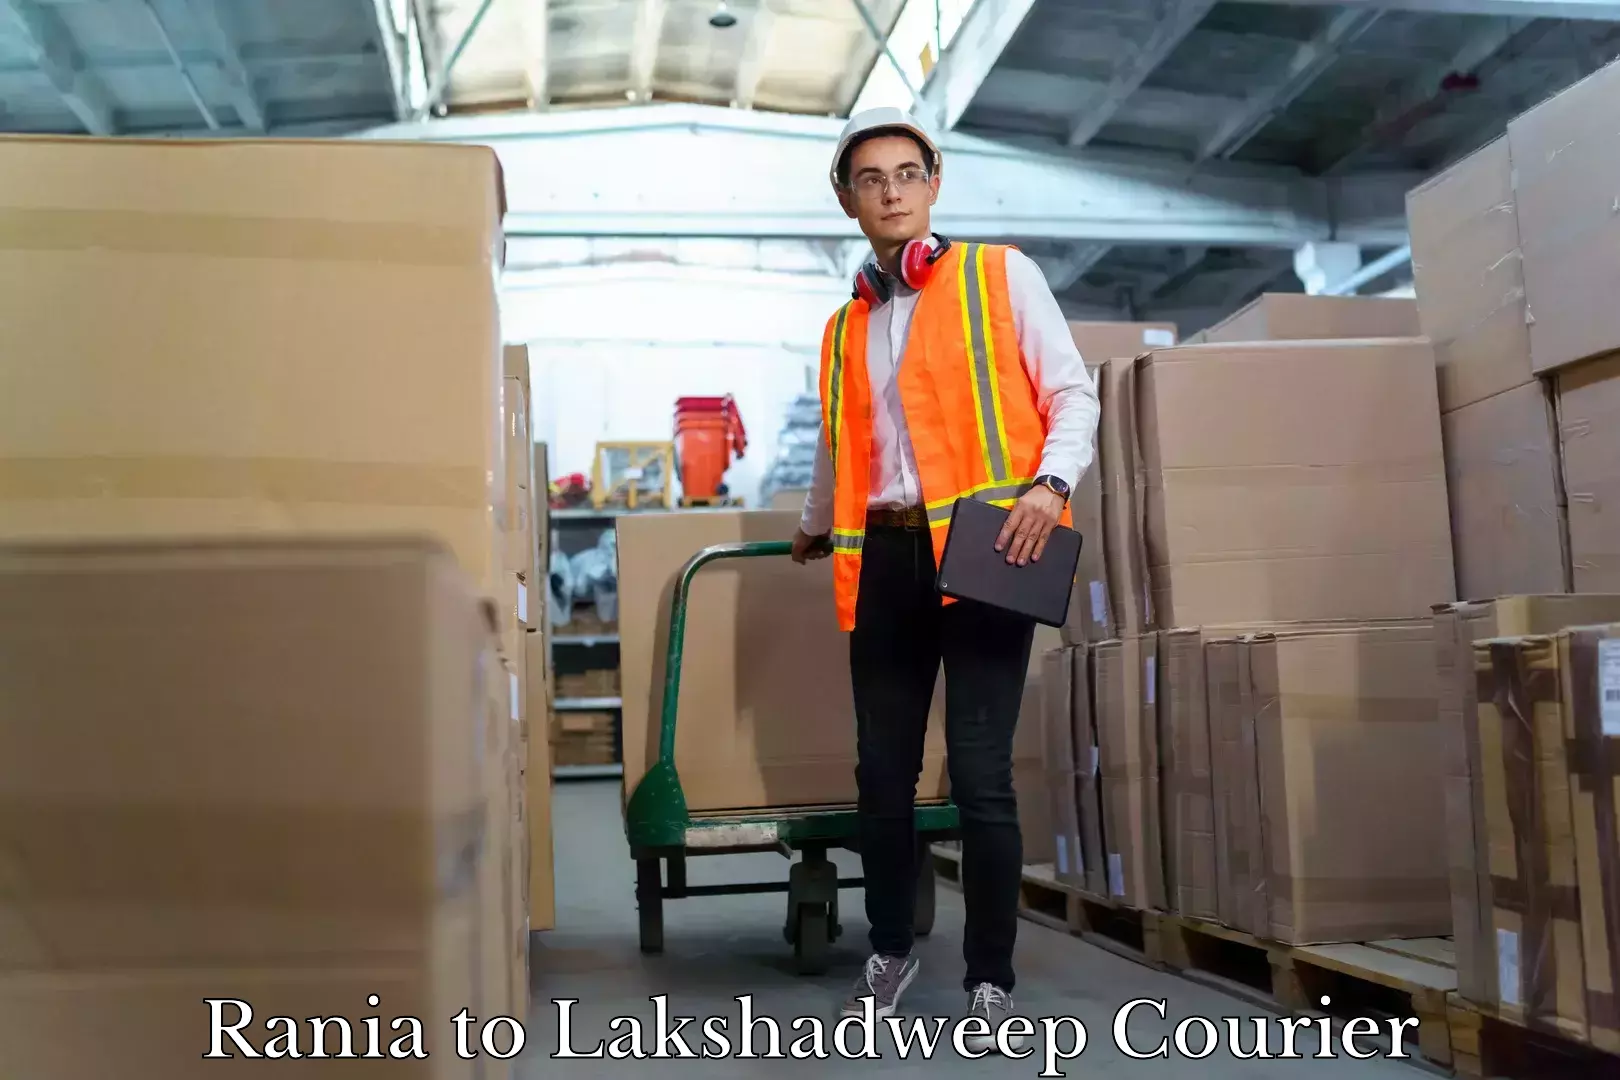 Professional moving company Rania to Lakshadweep